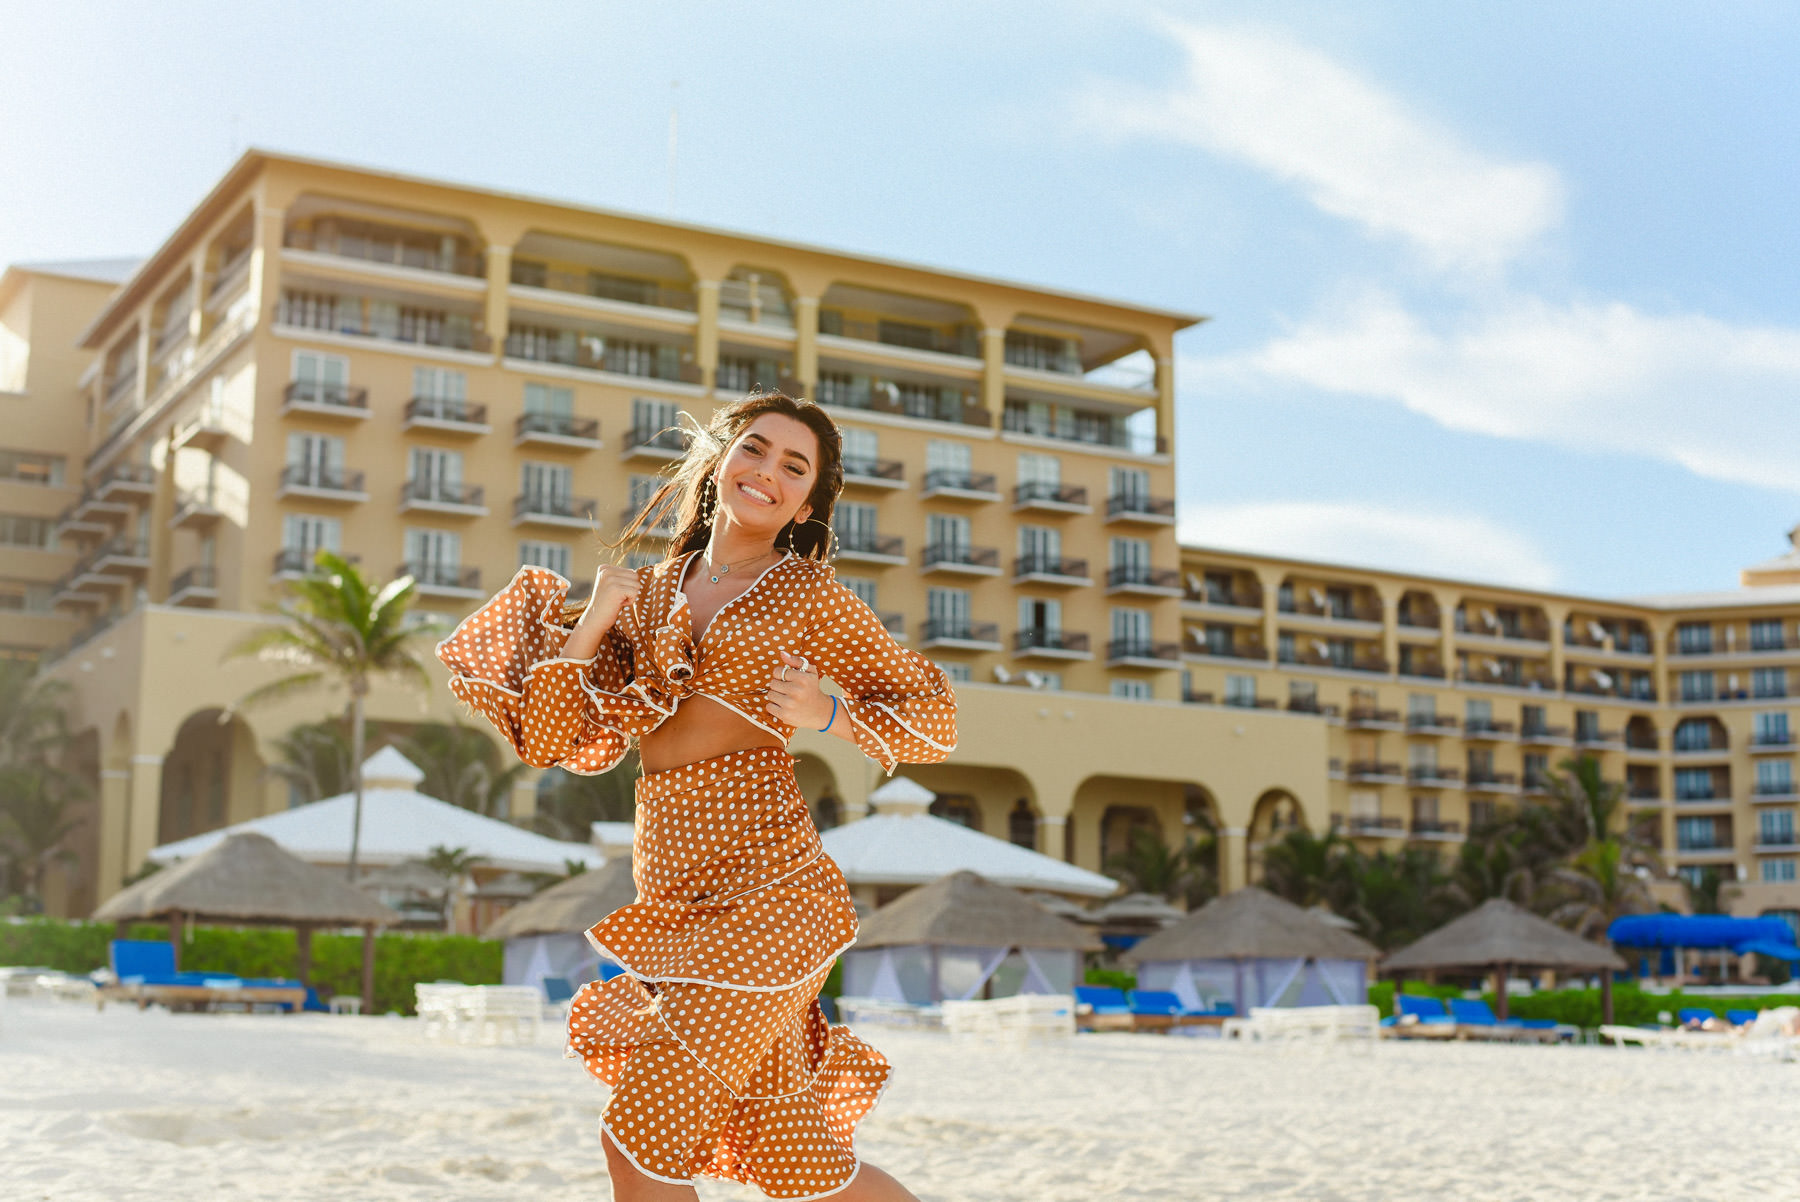 Cancun beach portraits by Take it Photo at The Ritz-Carlton Cancun hotel.